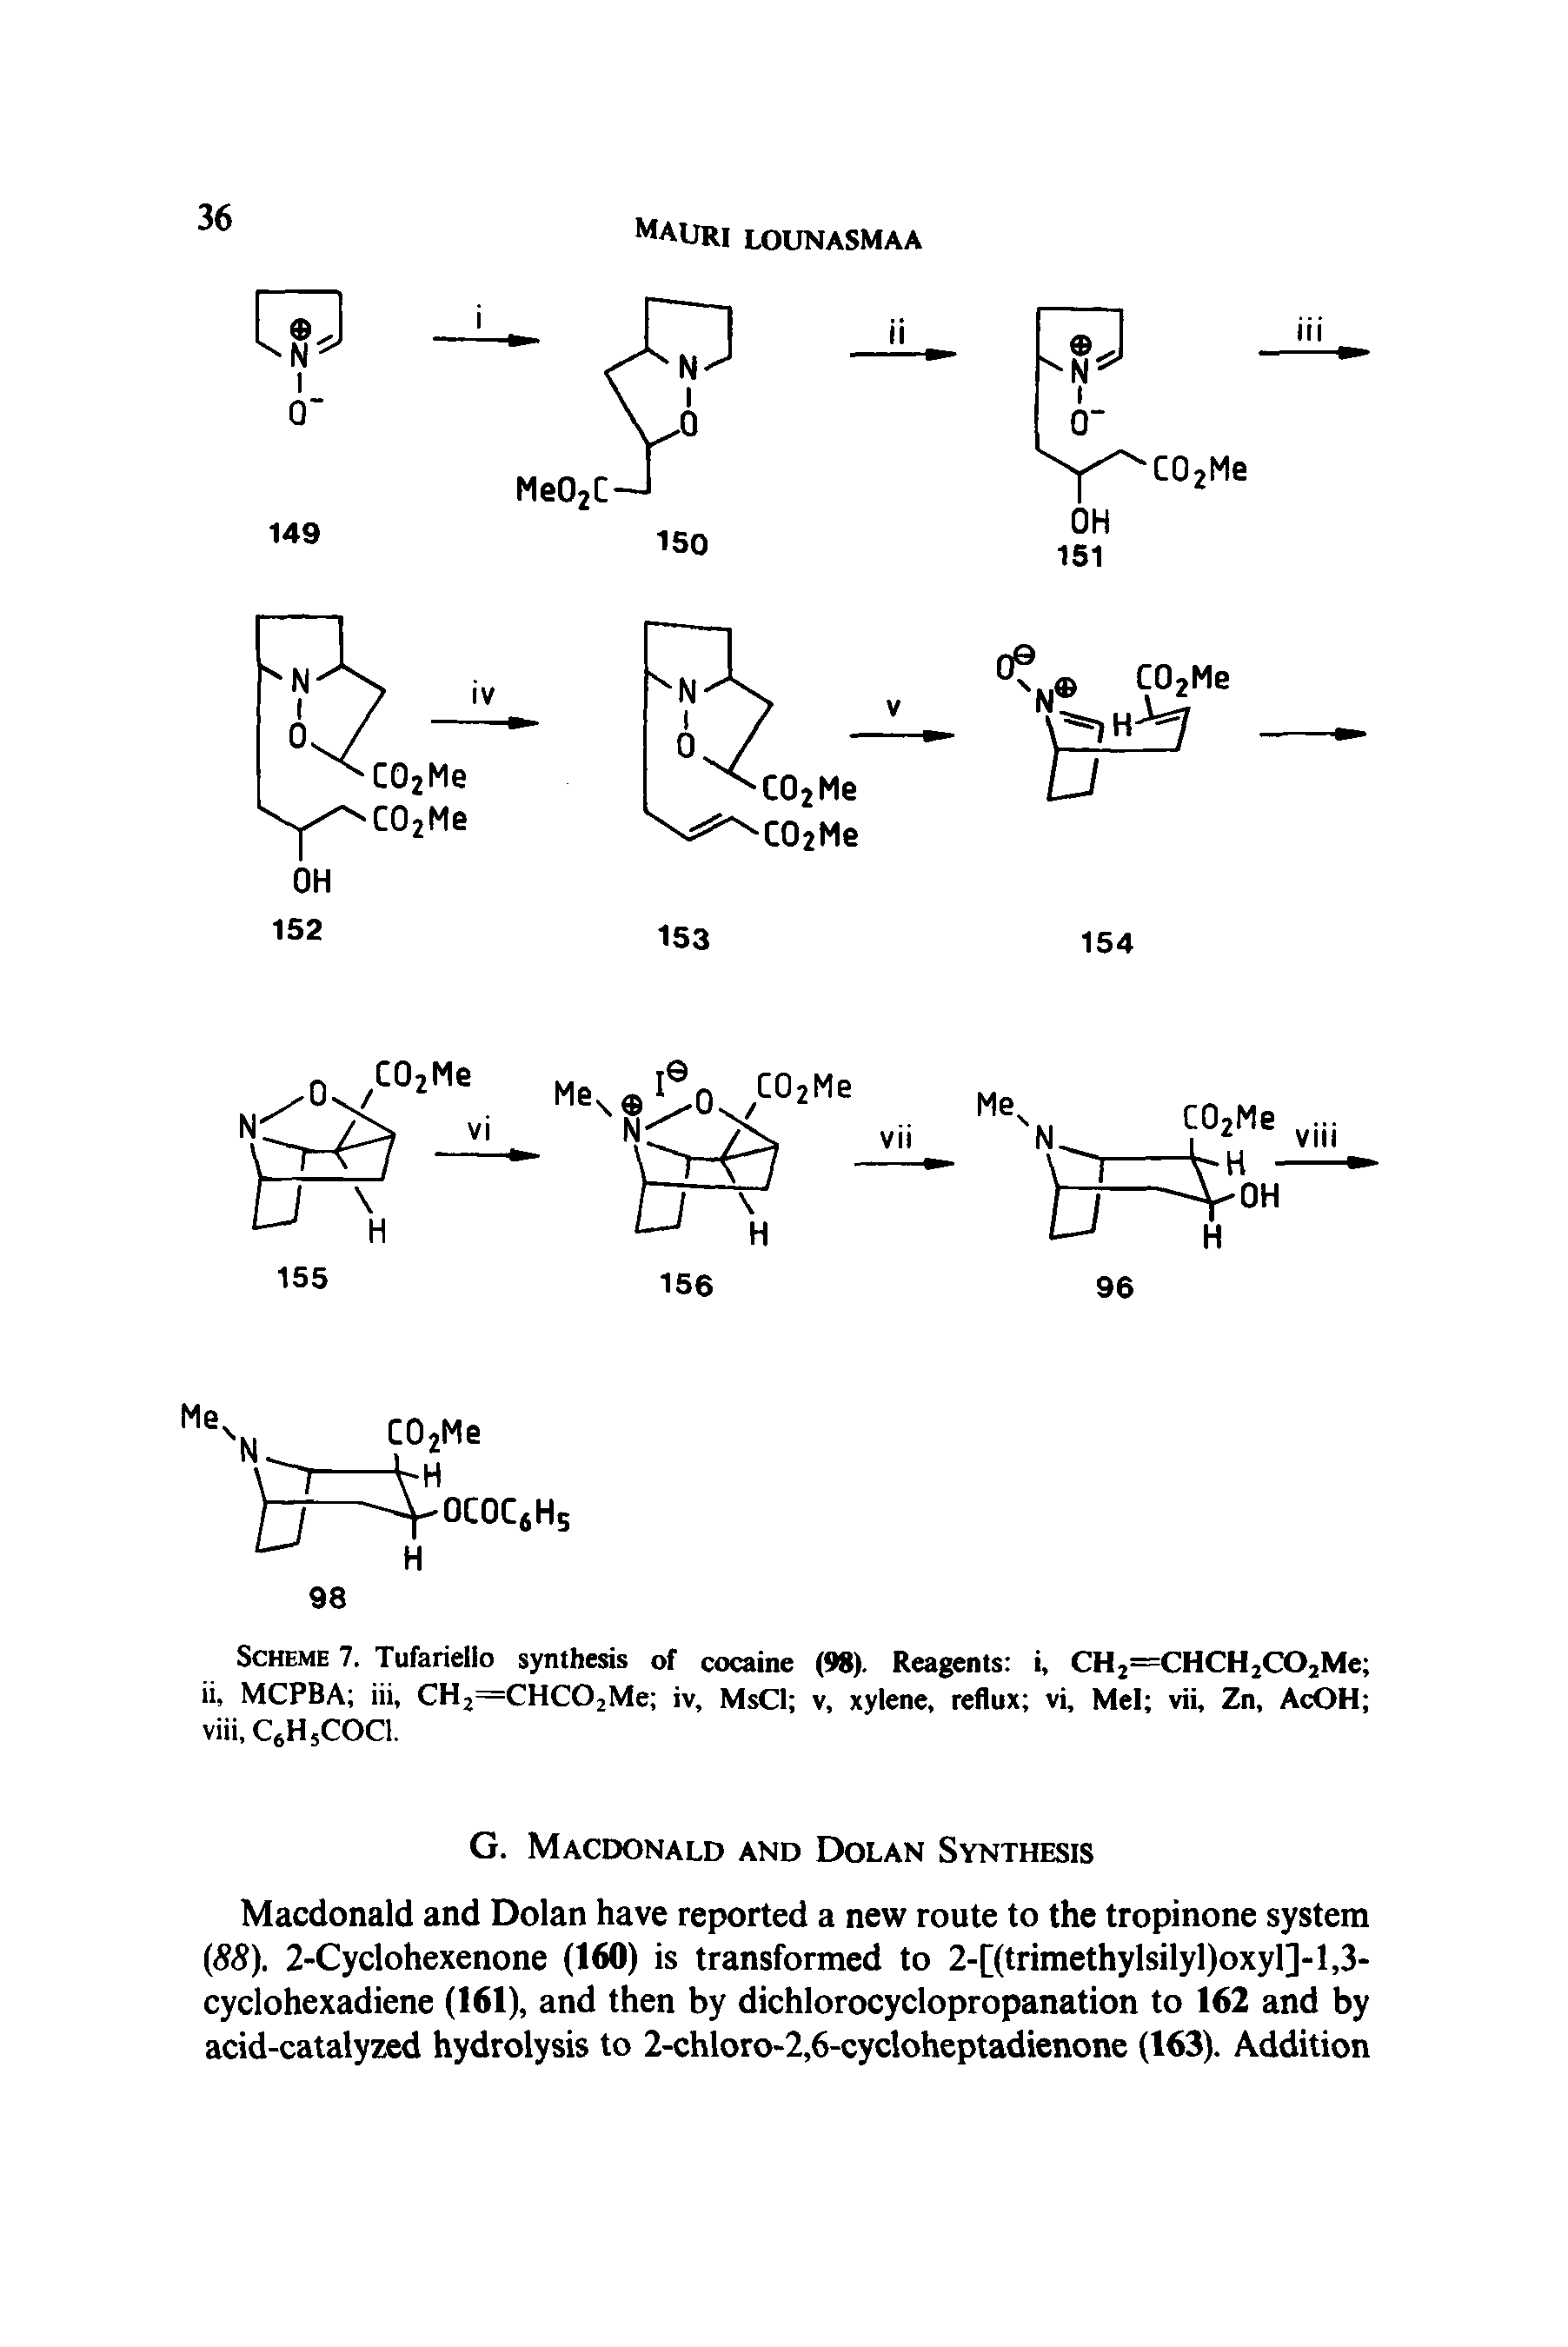 Scheme 7. Tufariello synthesis of cocaine (98). Reagents i, CH2=CHCH2C02Me ii, MCPBA iii, CH2=CHC02Me iv, MsCl v, xylene, reflux vi, Mel vii, Zn, AcOH viii, C6H5COCl.